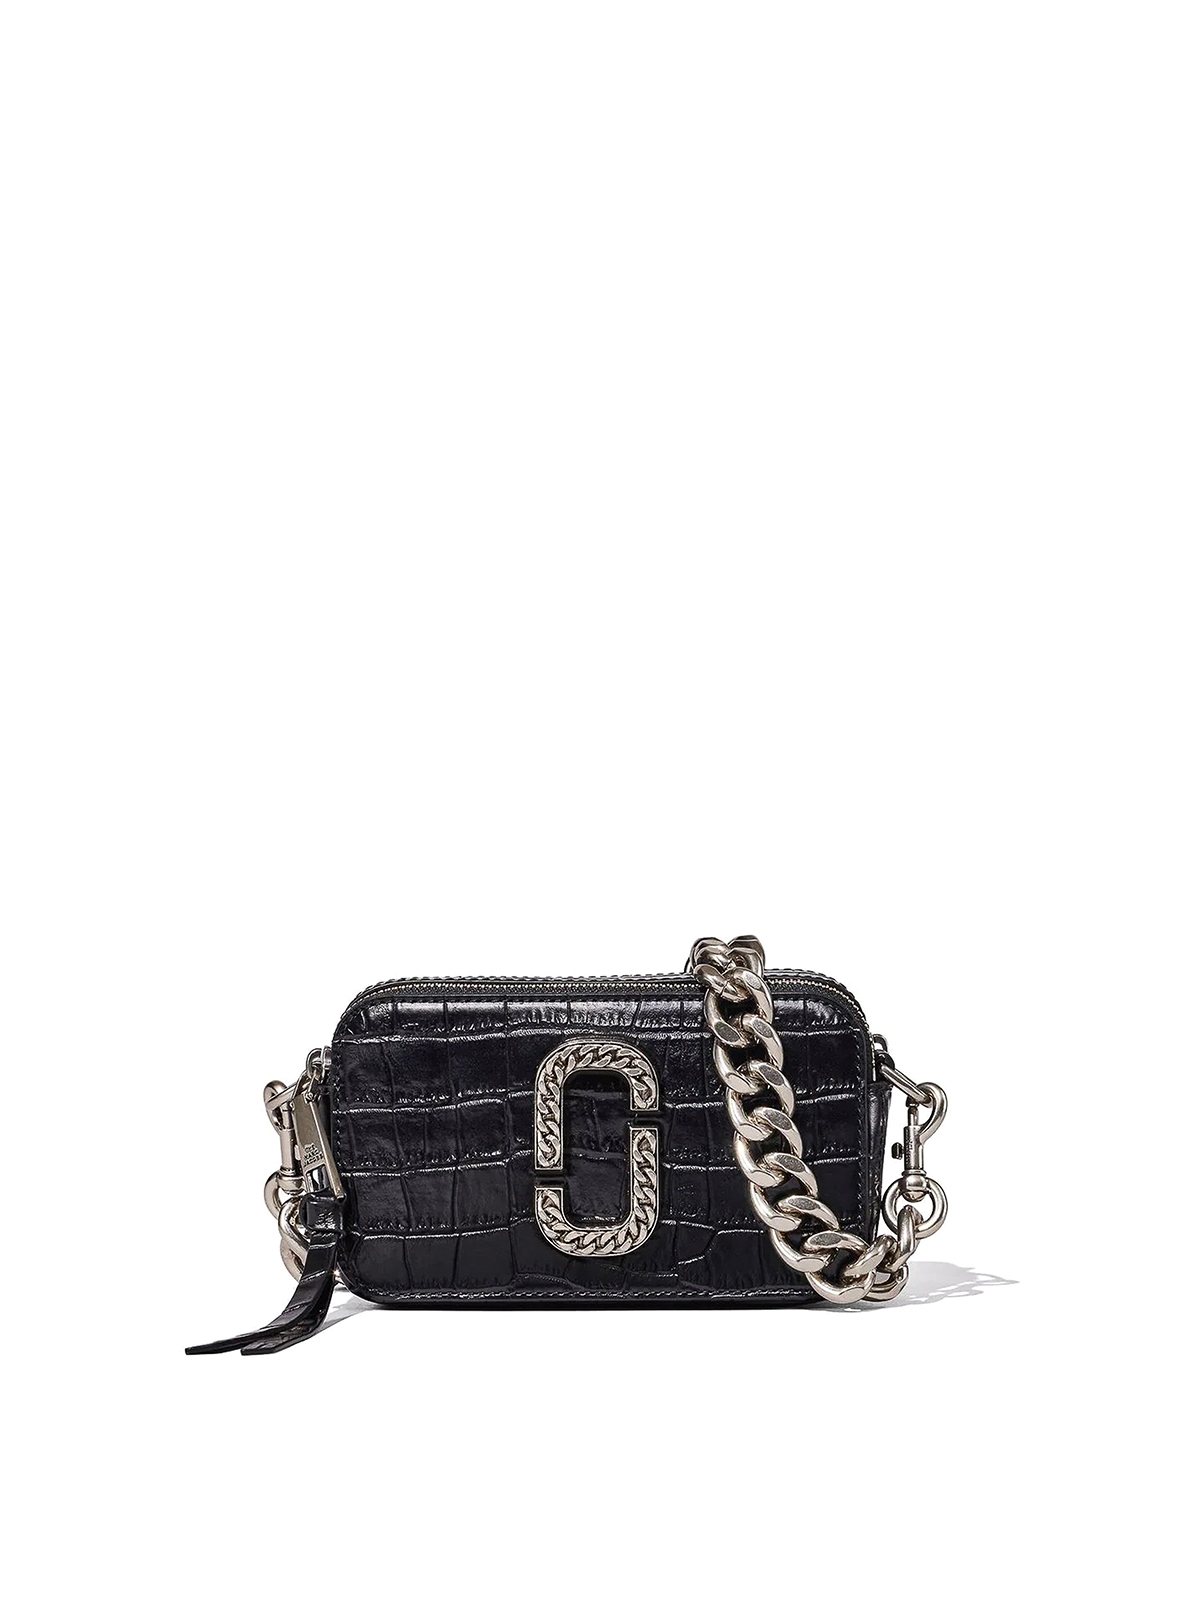 Marc Jacobs Snapshot Crossbody Bag With Chain Black/Red, Crossbody Bag